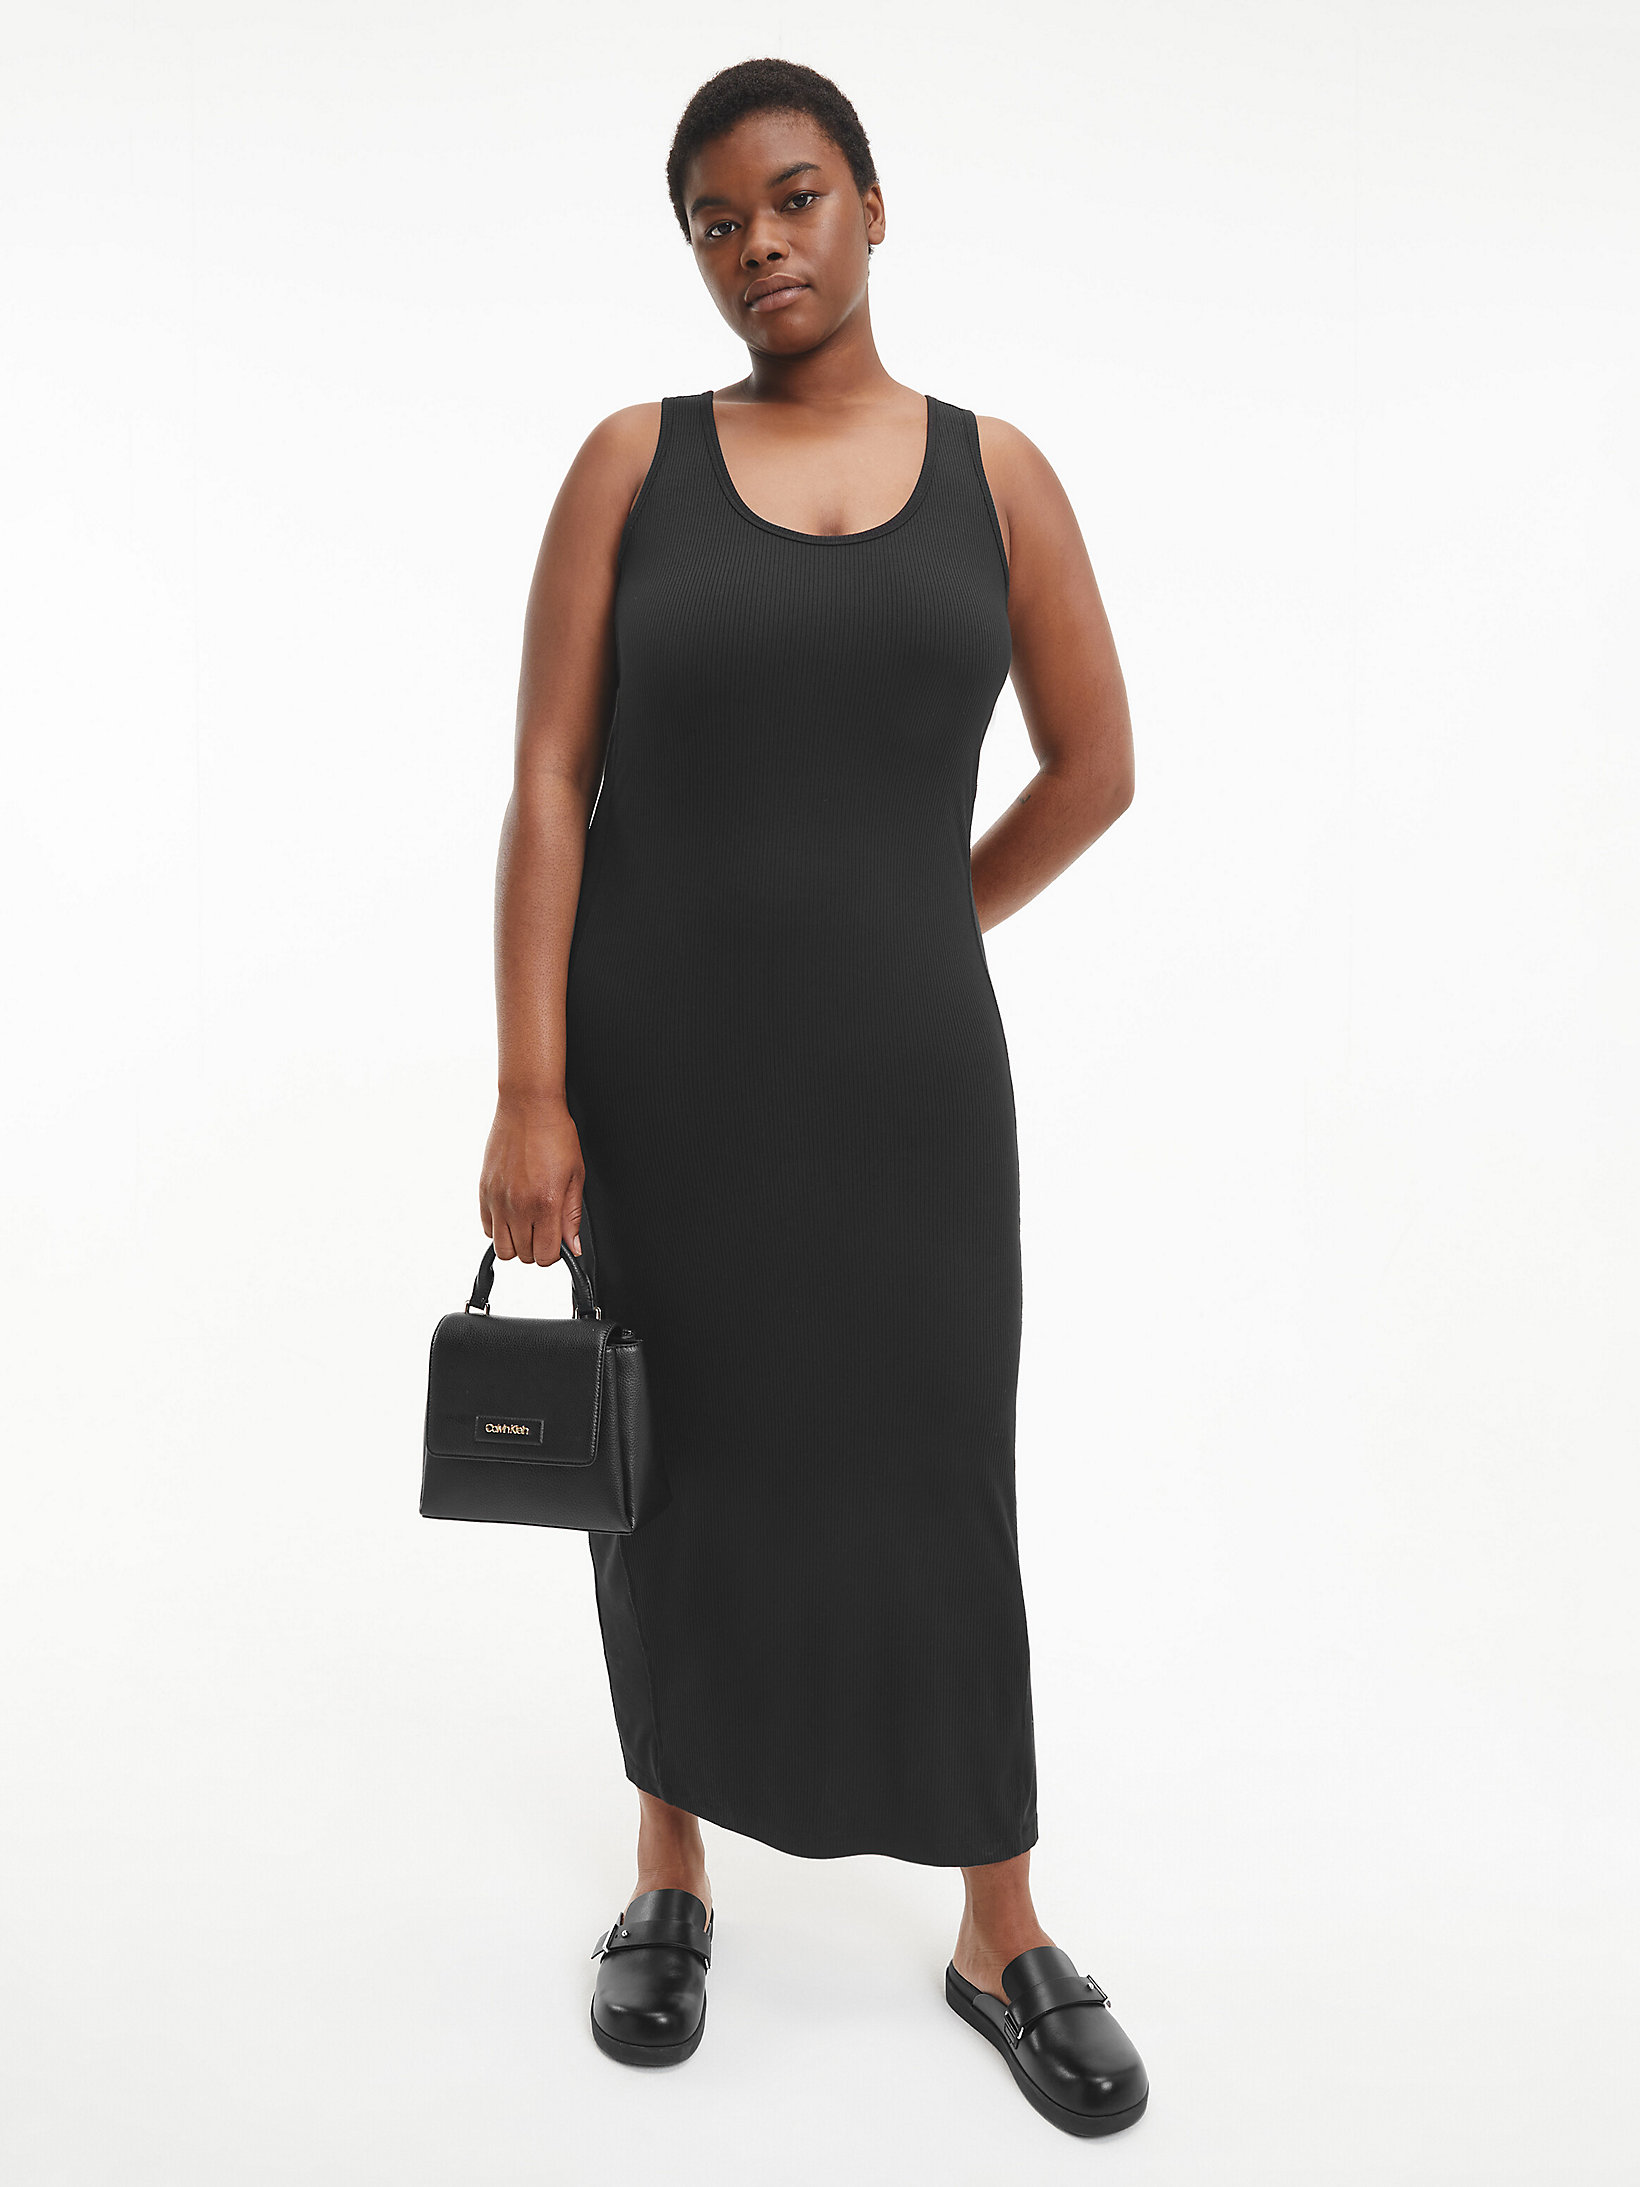 CK Black > Трикотажное платье-майка в рубчик плюс-сайз > undefined Женщины - Calvin Klein